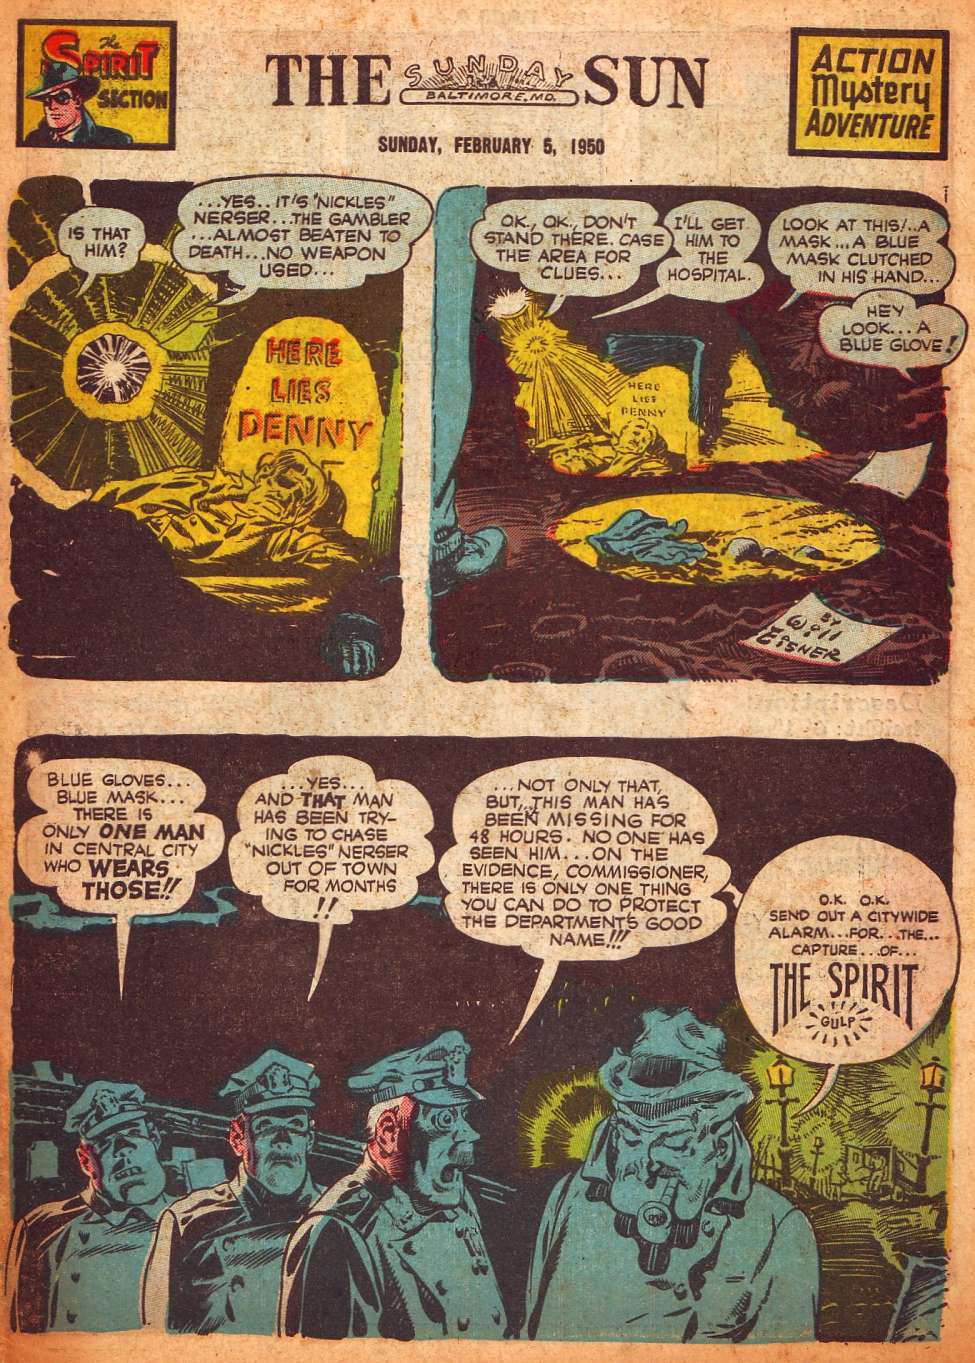 Comic Book Cover For The Spirit (1950-02-05) - Baltimore Sun